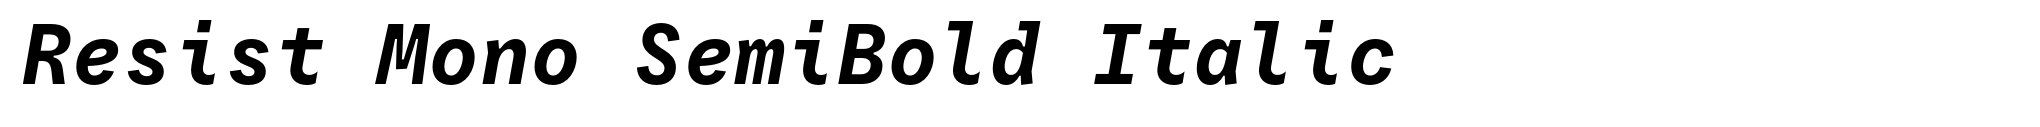 Resist Mono SemiBold Italic image